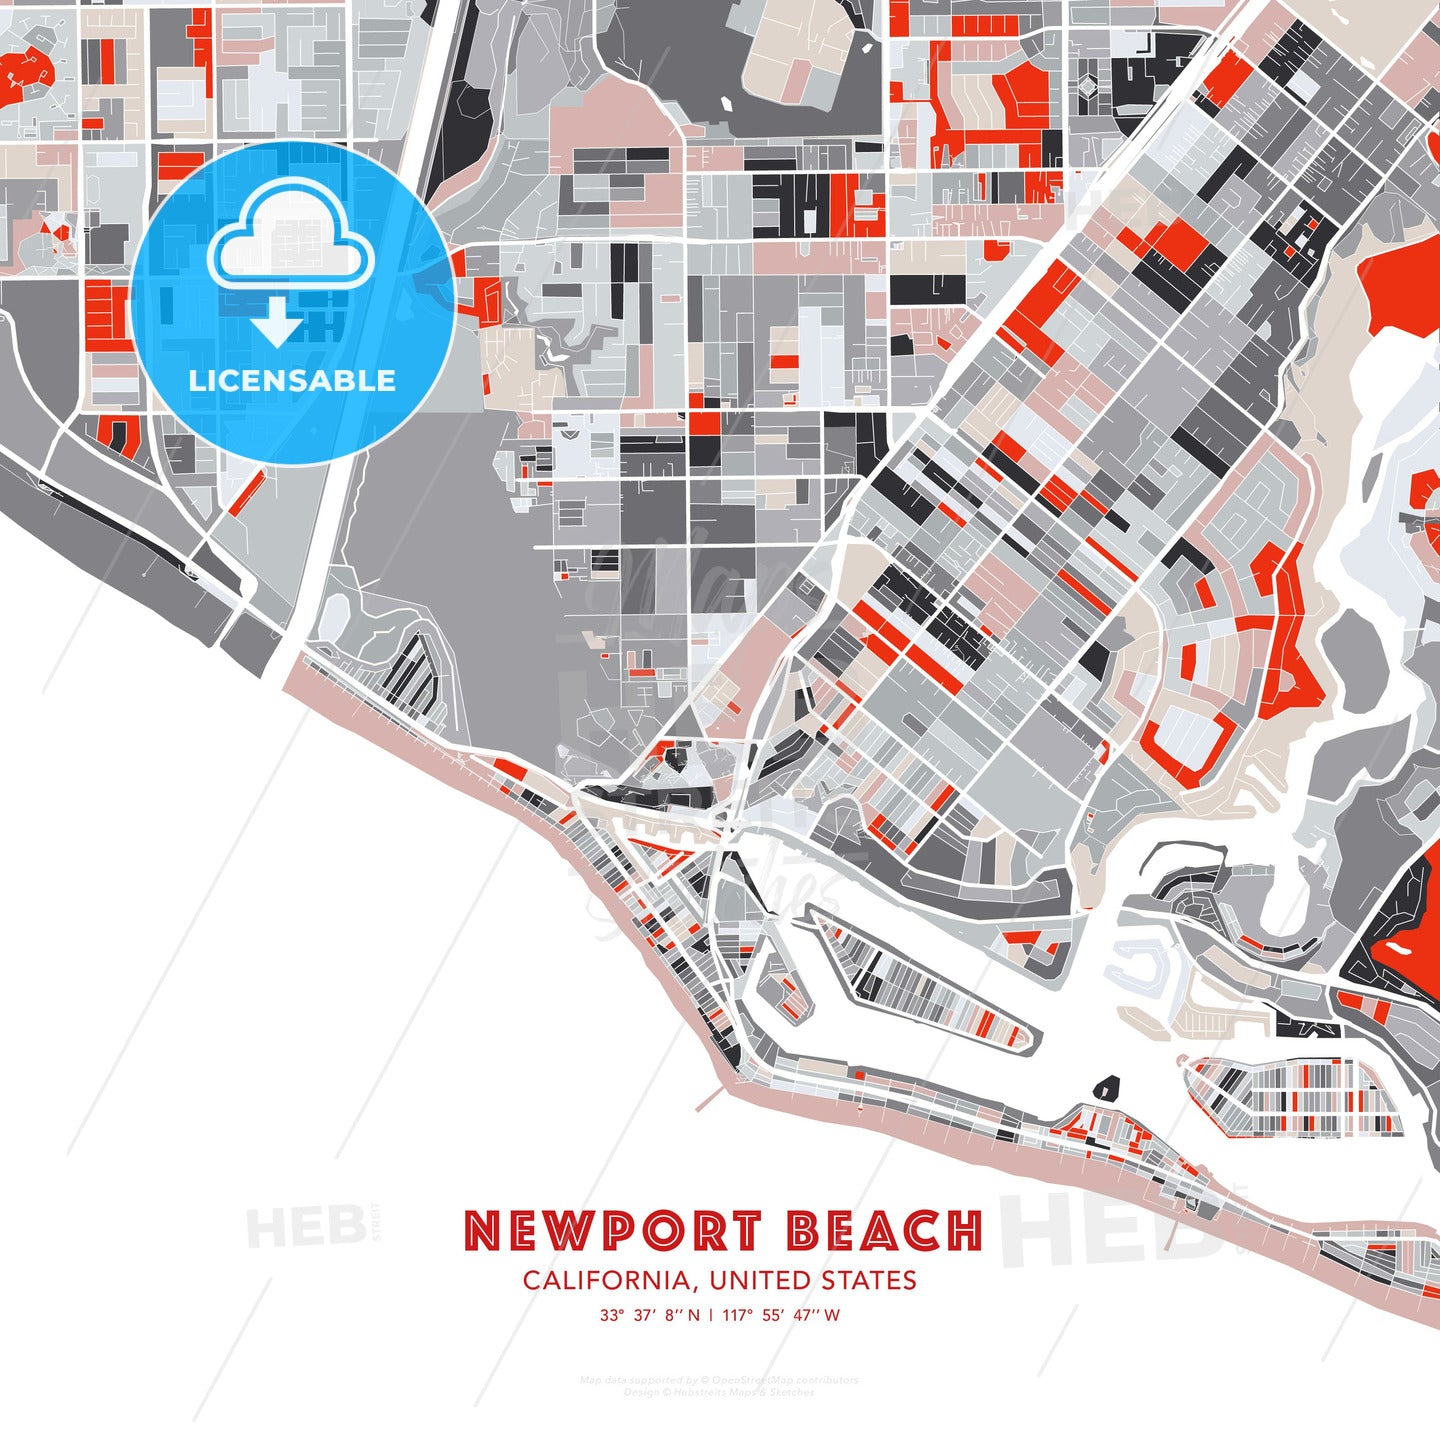 Newport Beach, California, United States, modern map - HEBSTREITS Sketches